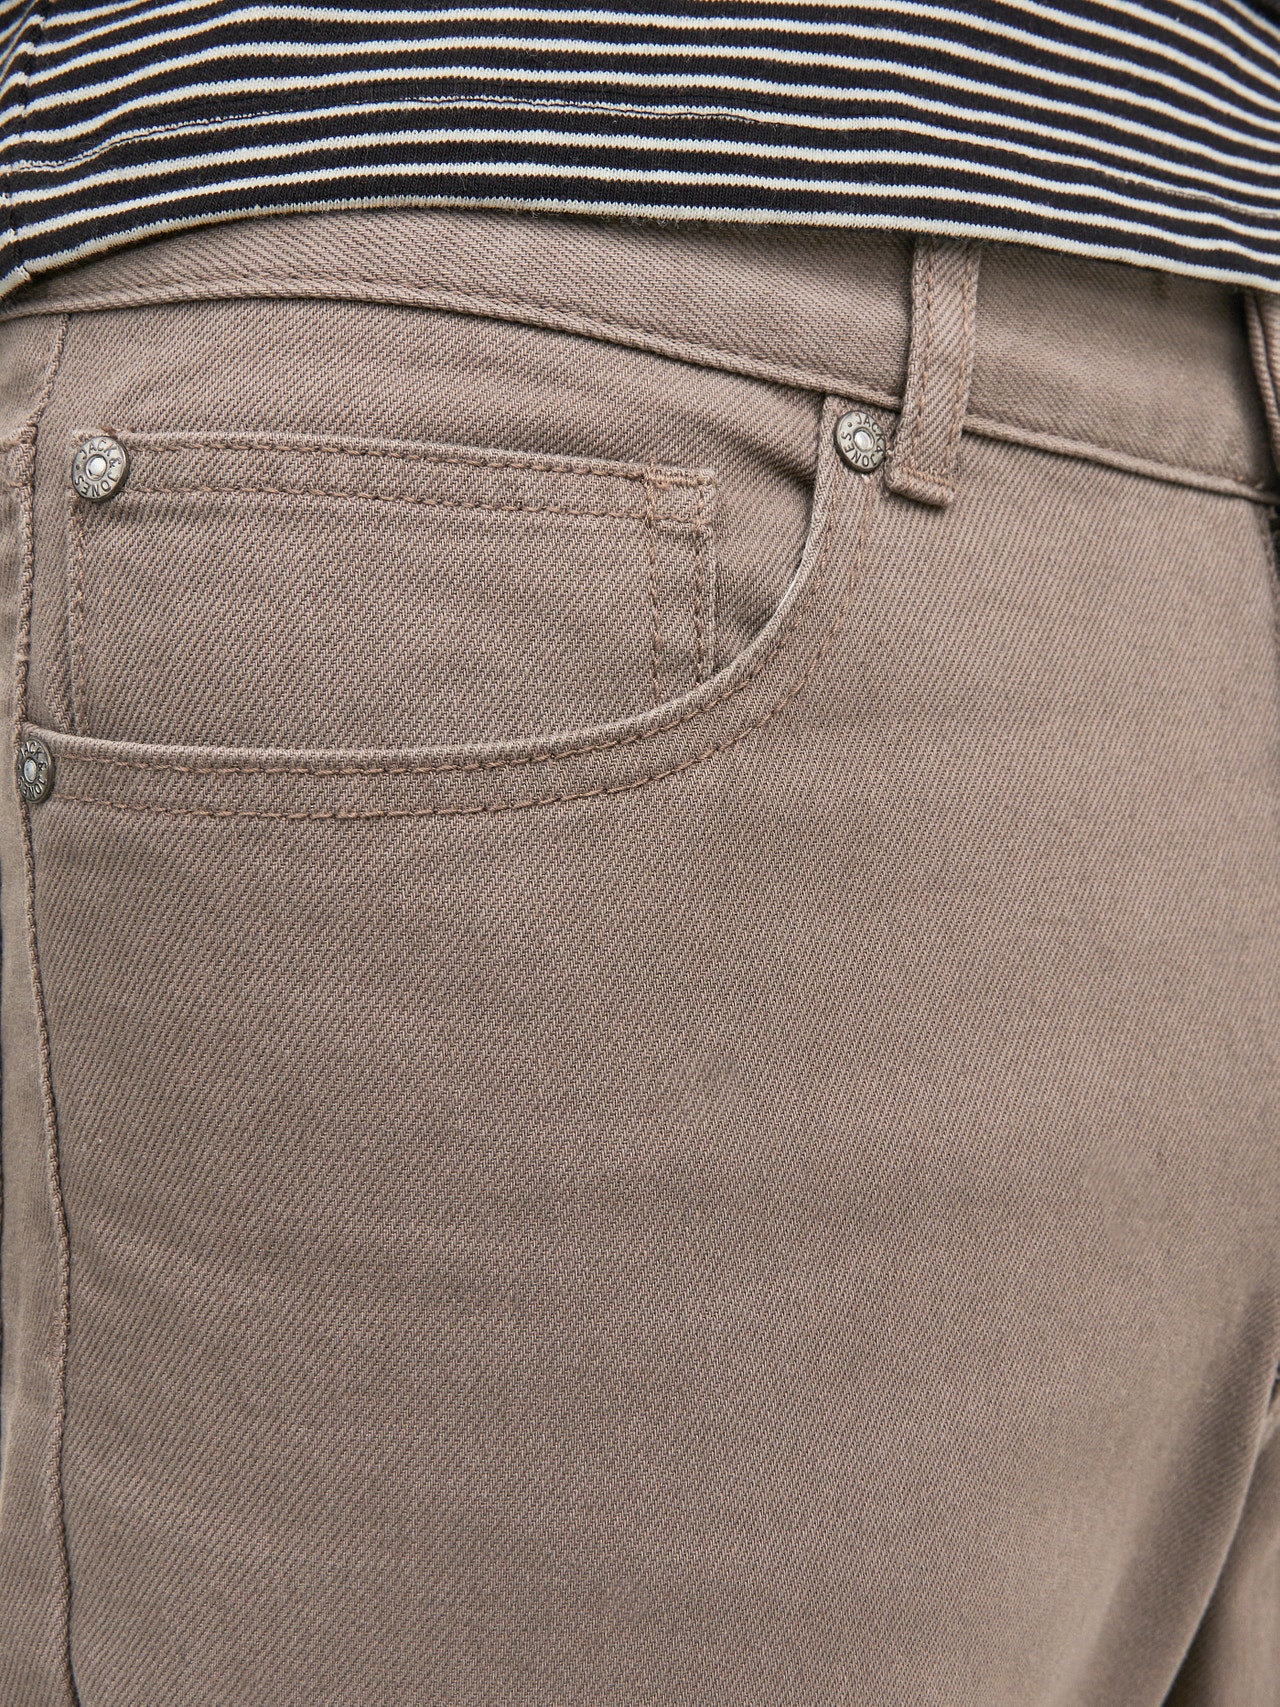 Jack & Jones Regular Fit Chino pants -Falcon - 12216976